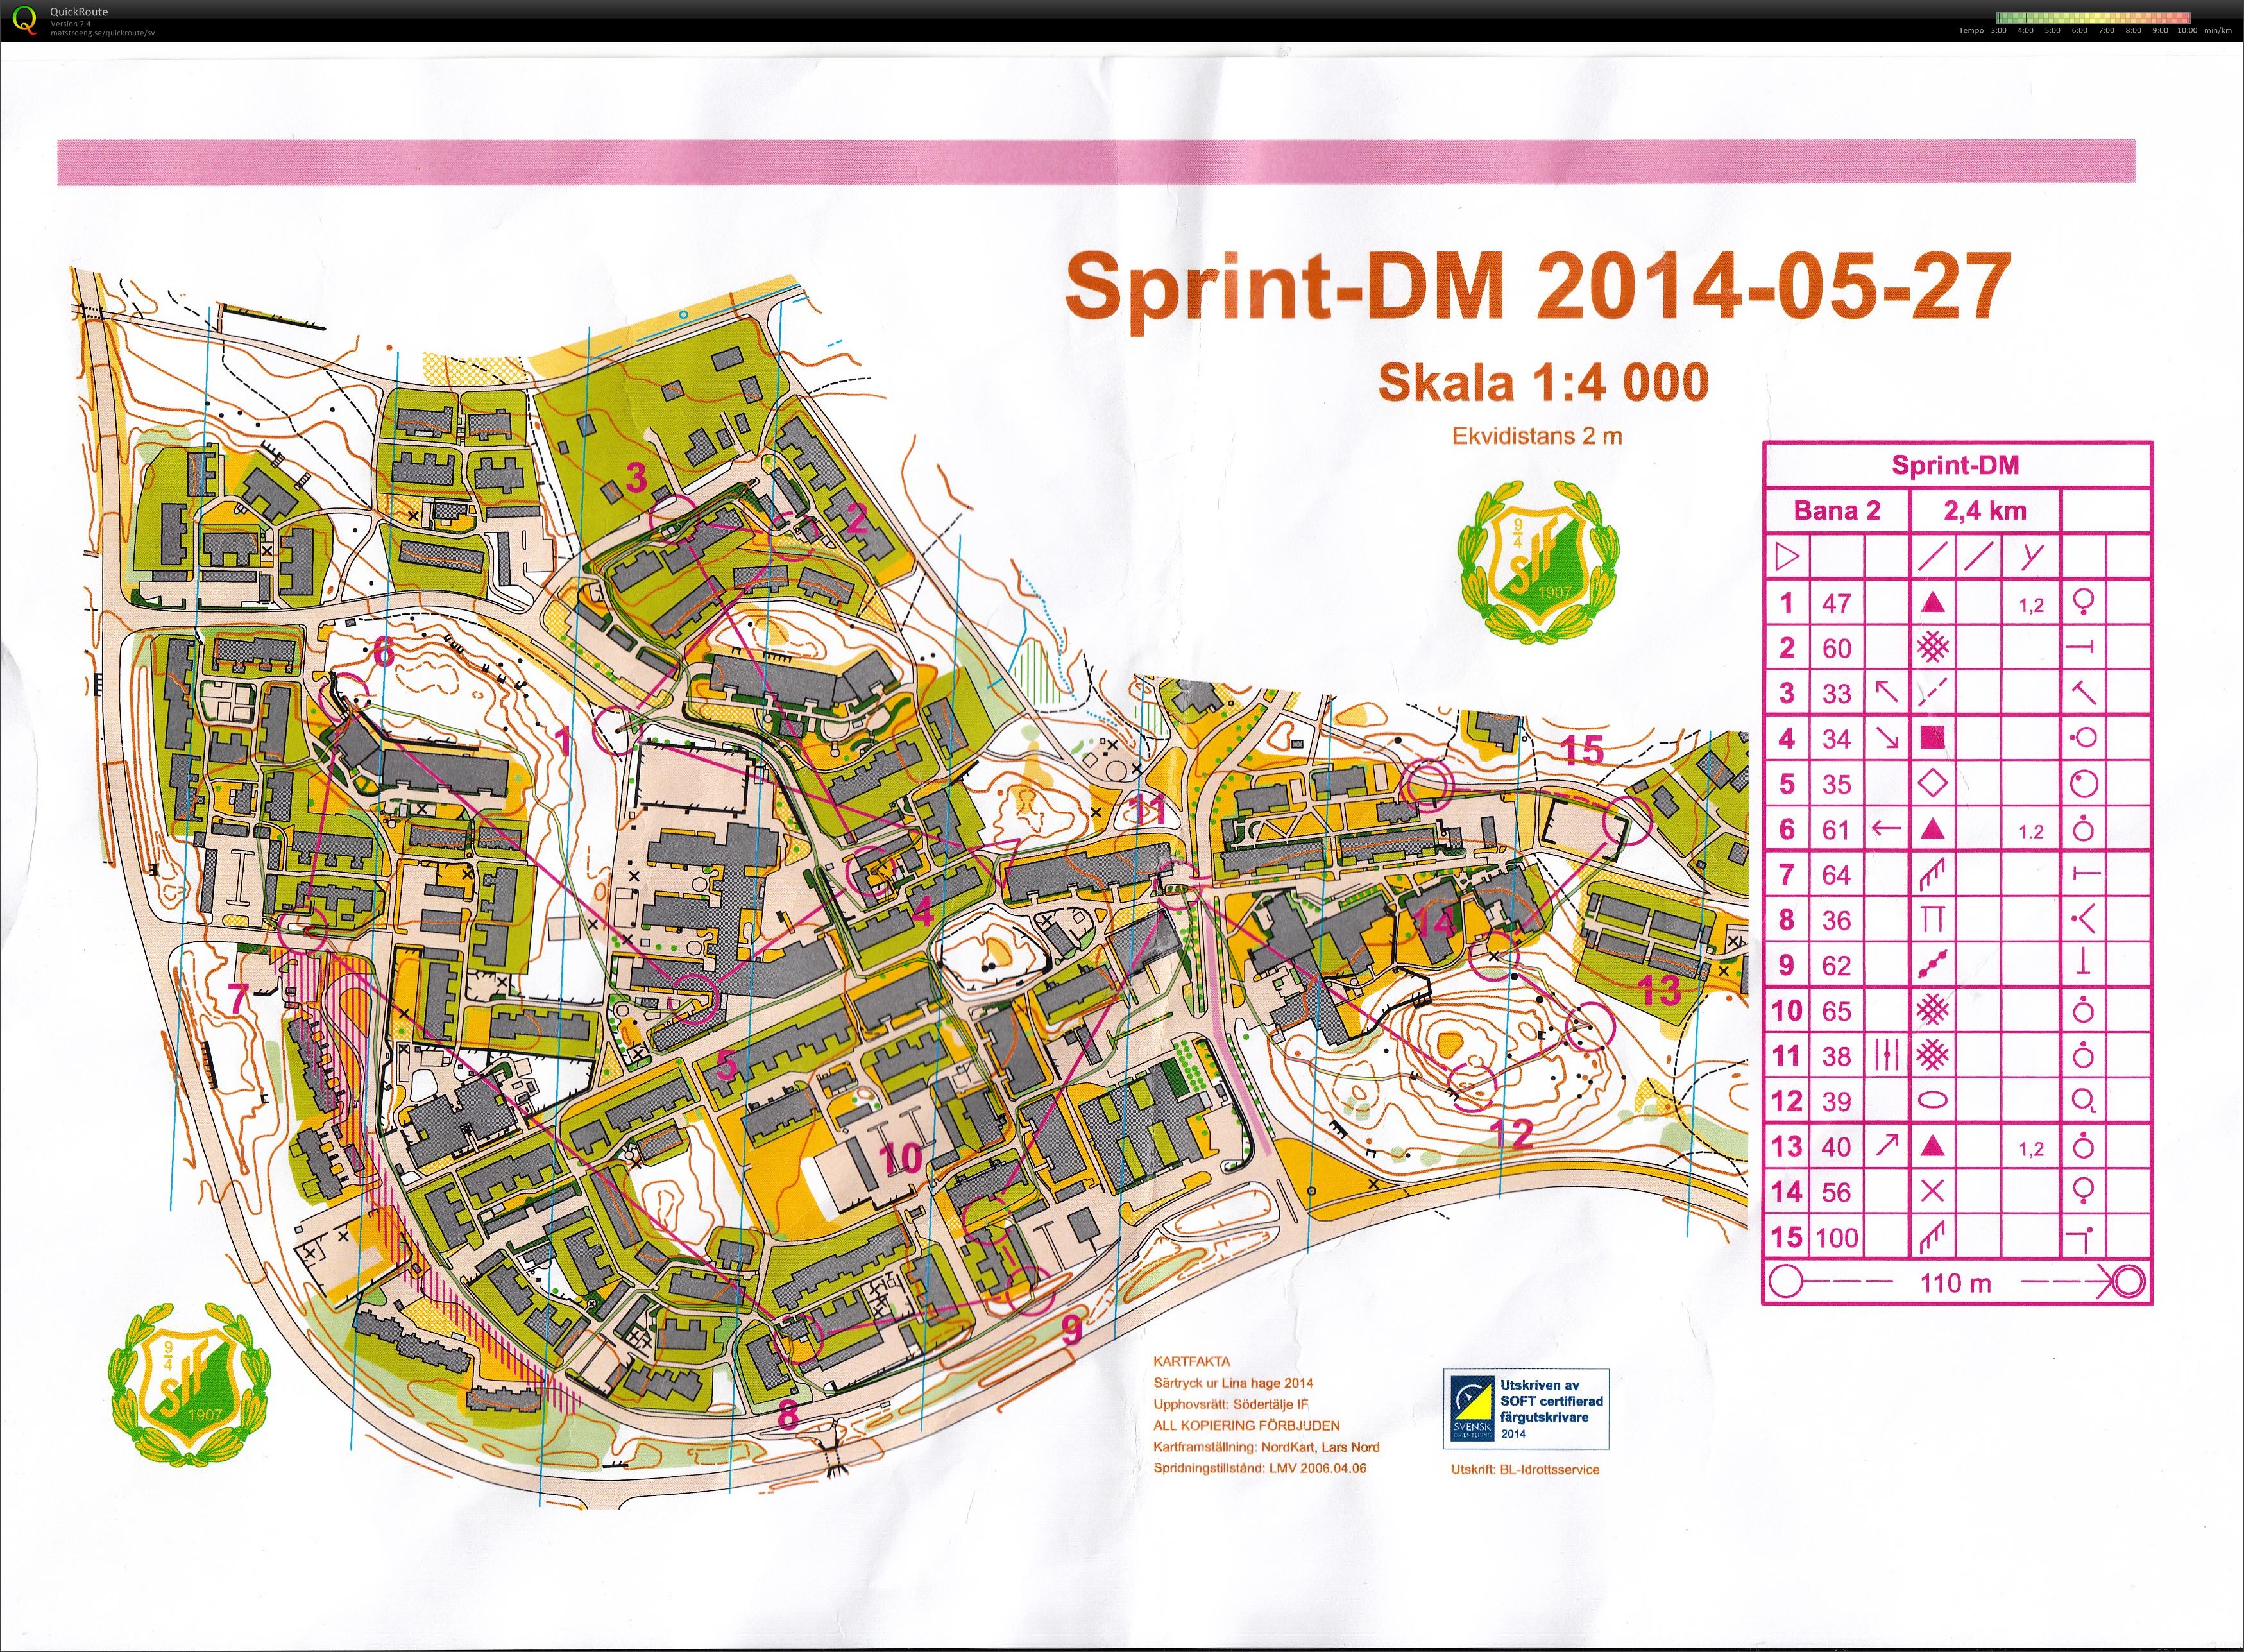 Sprint-DM (2014-05-27)